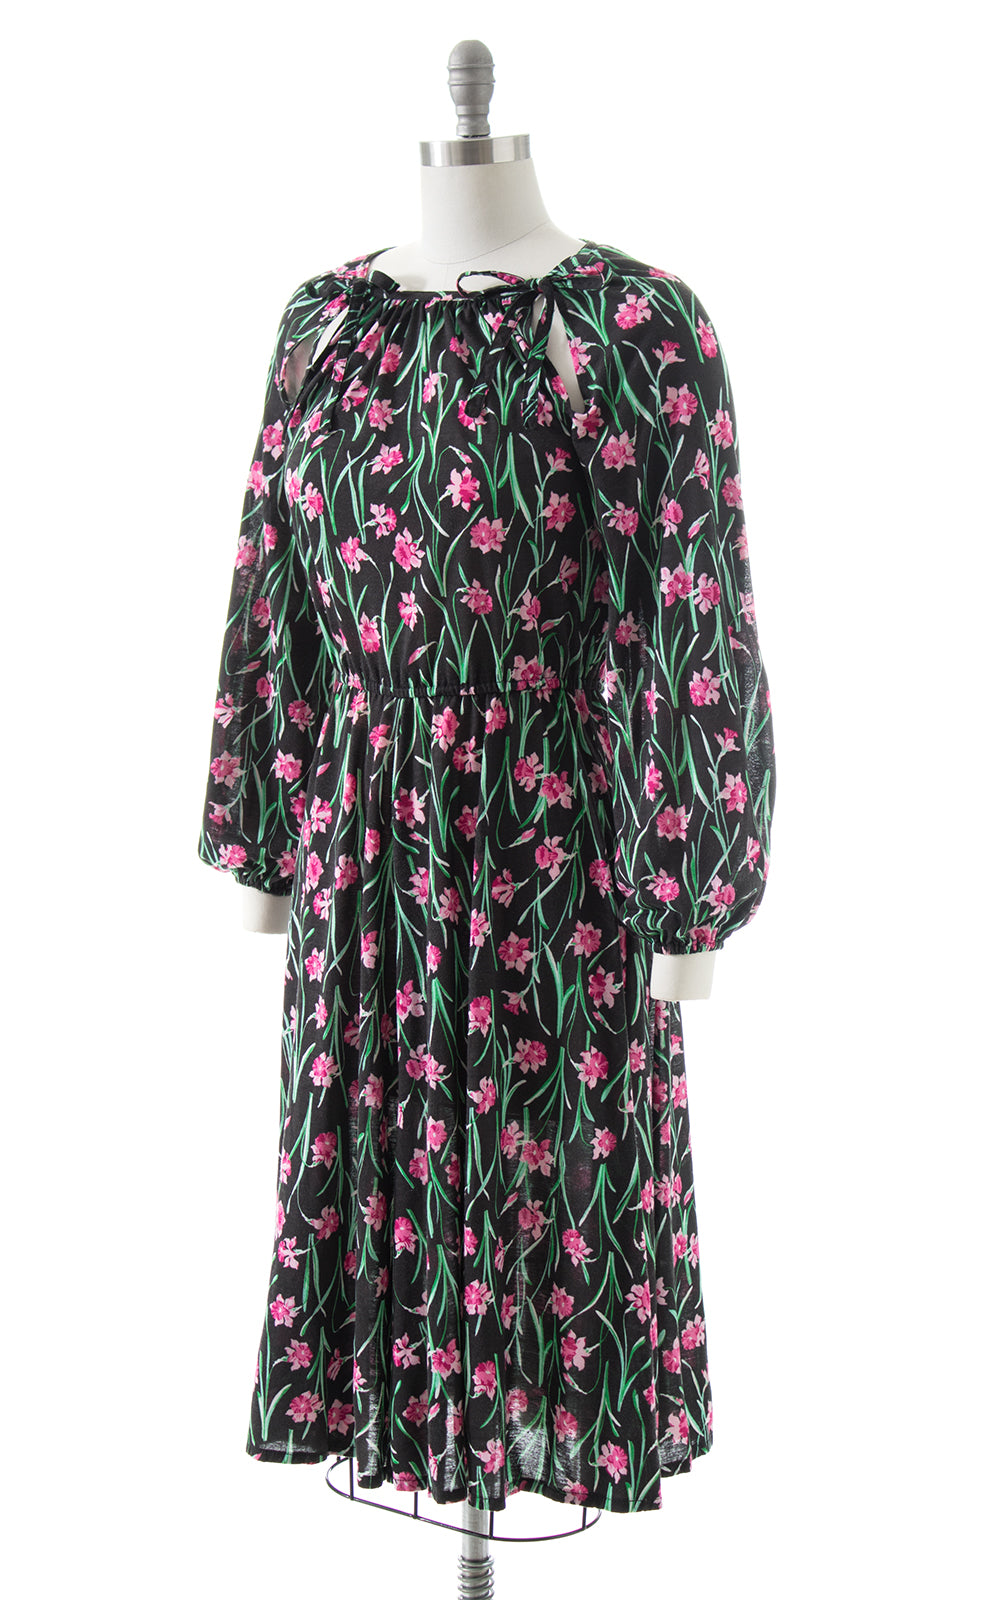 1970s Floral Jersey Dress